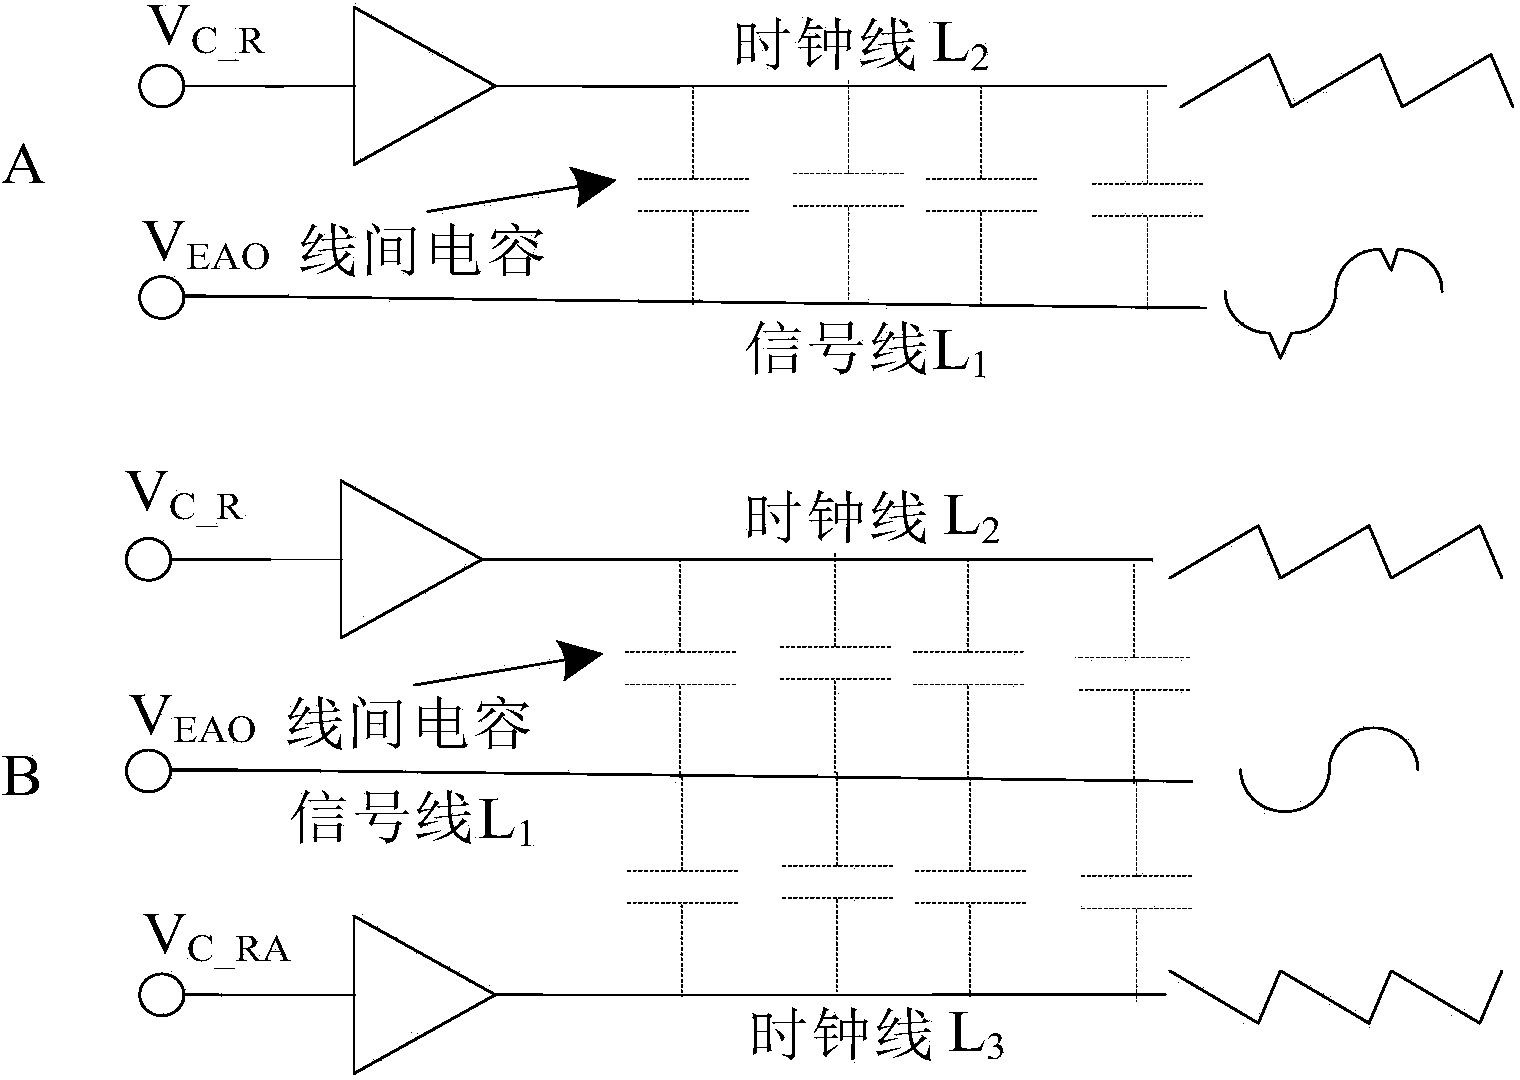 Pulse width modulation circuit